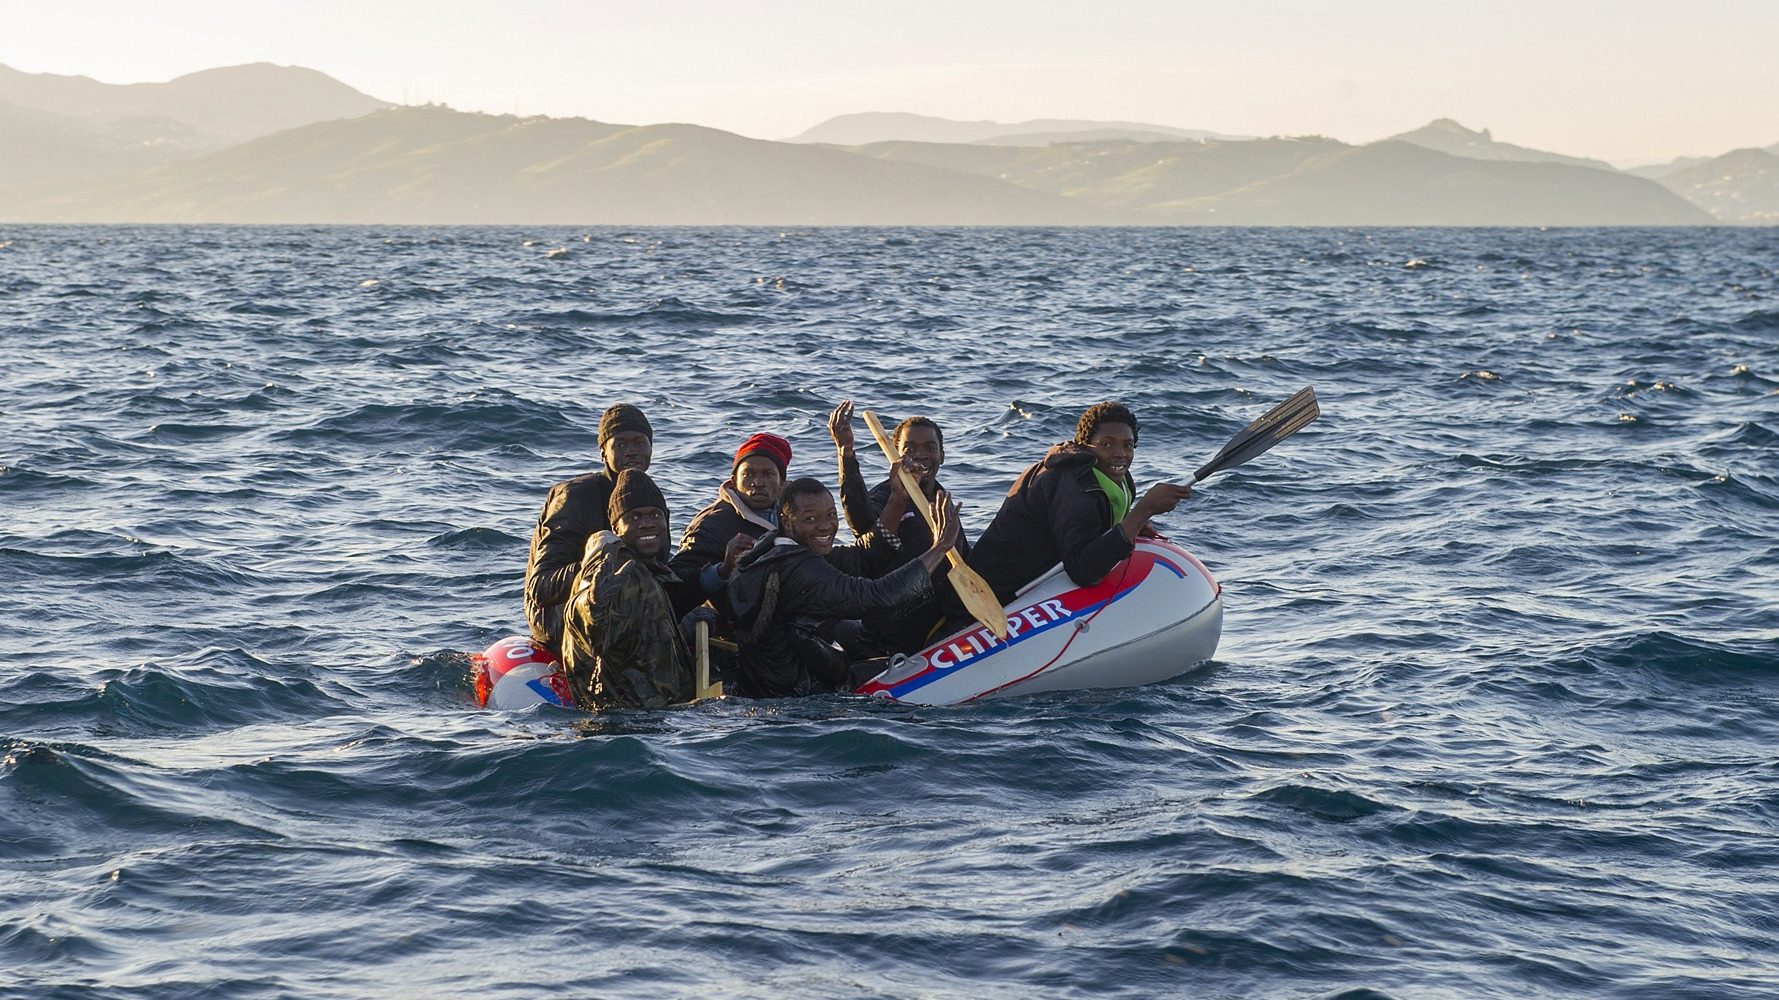 Moroccan Navy Rescues 385 Migrants Crossing Mediterranean To Reach Europe